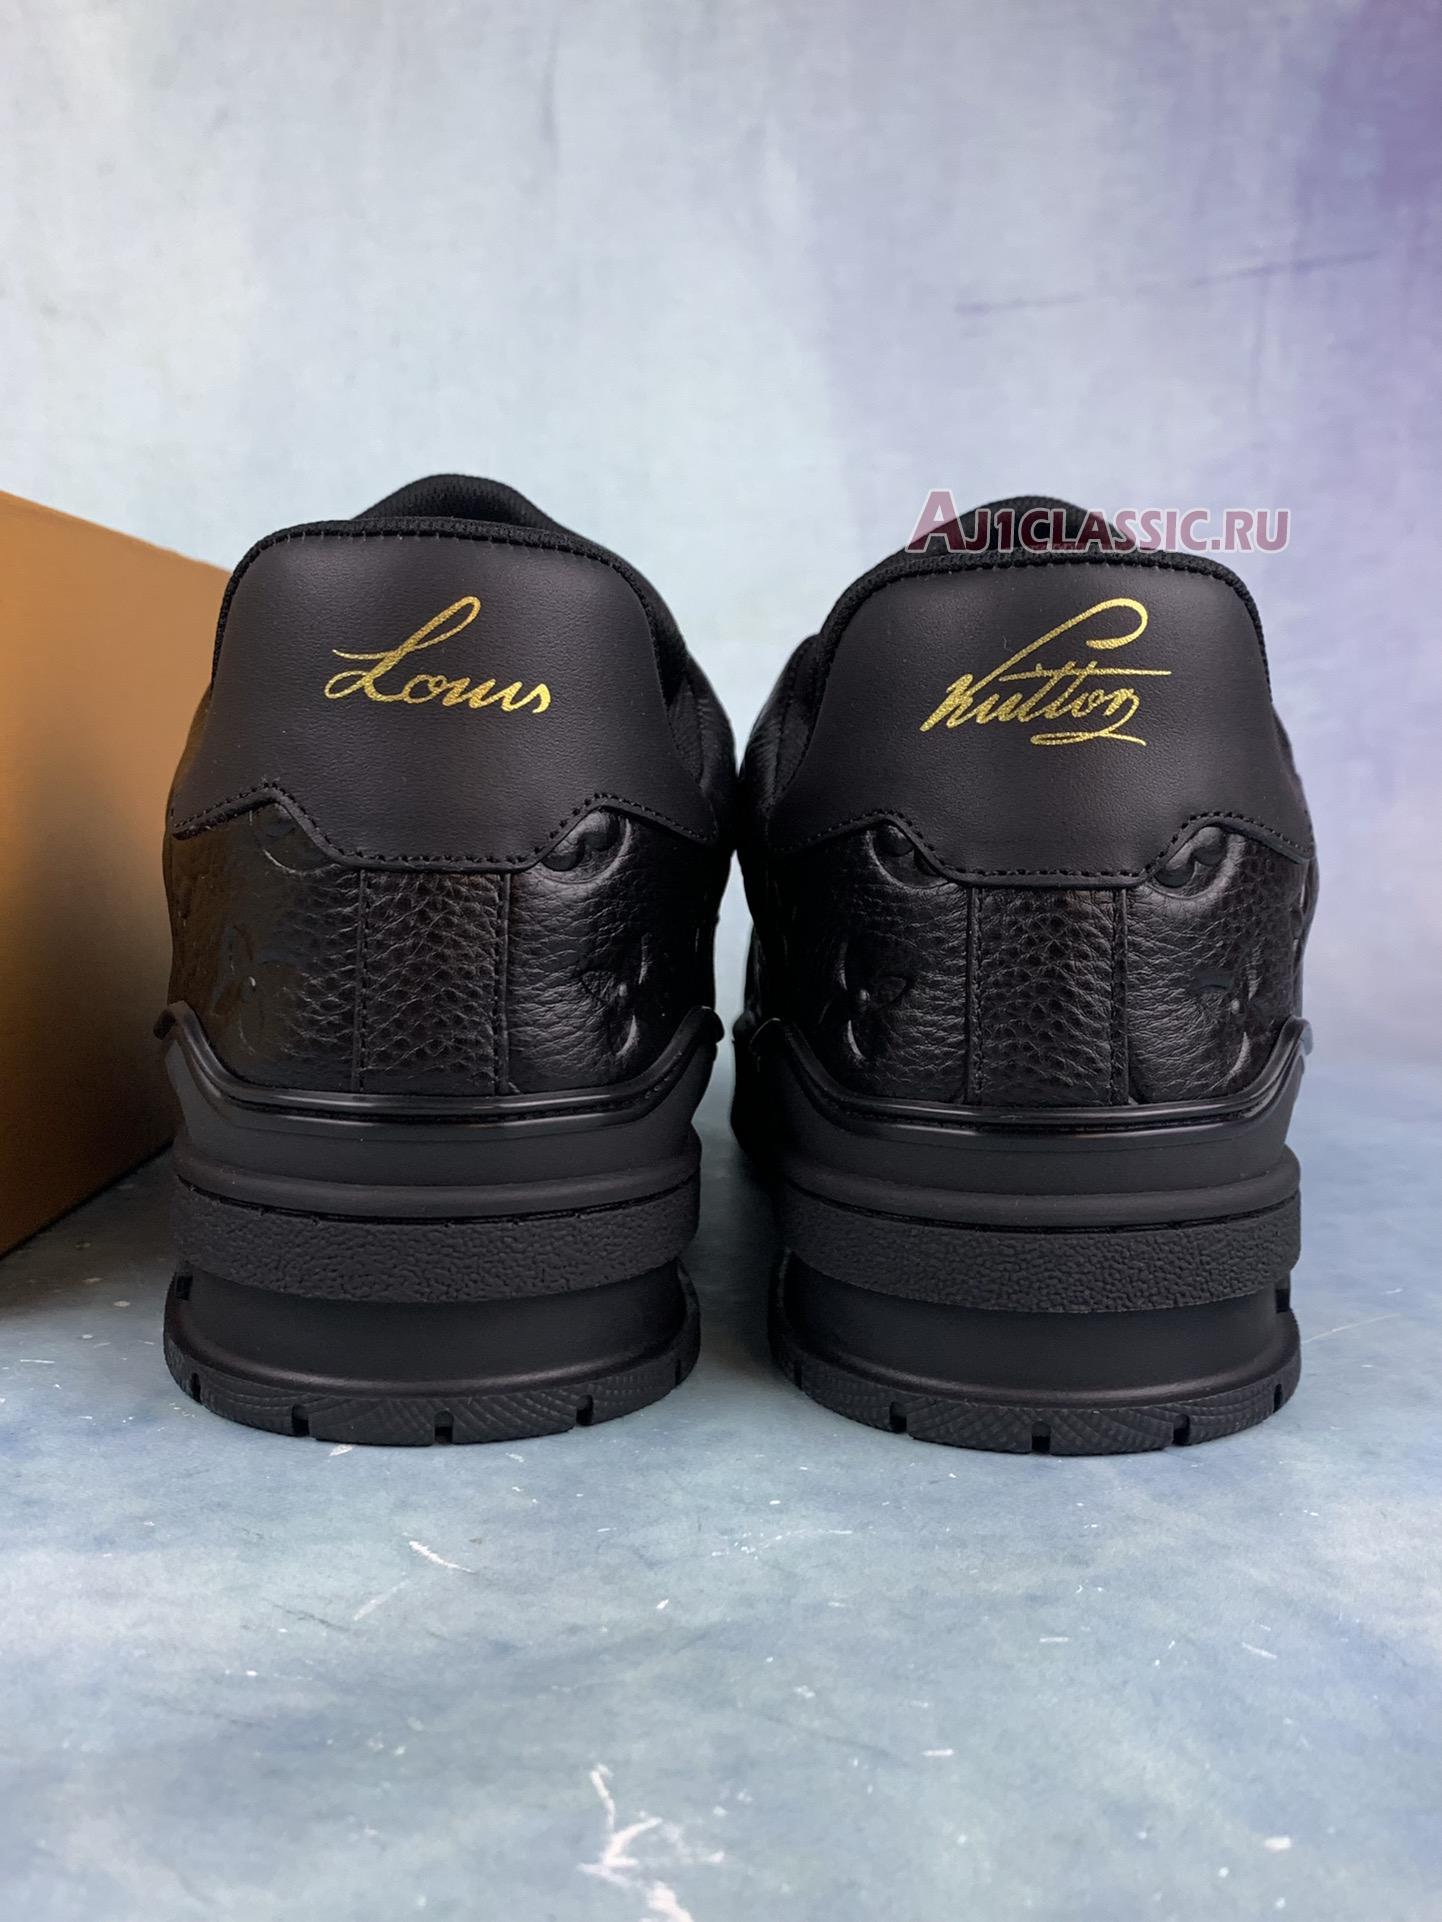 Louis Vuitton Trainer Sneaker "Embossed Monogram - Black" 1A7WER